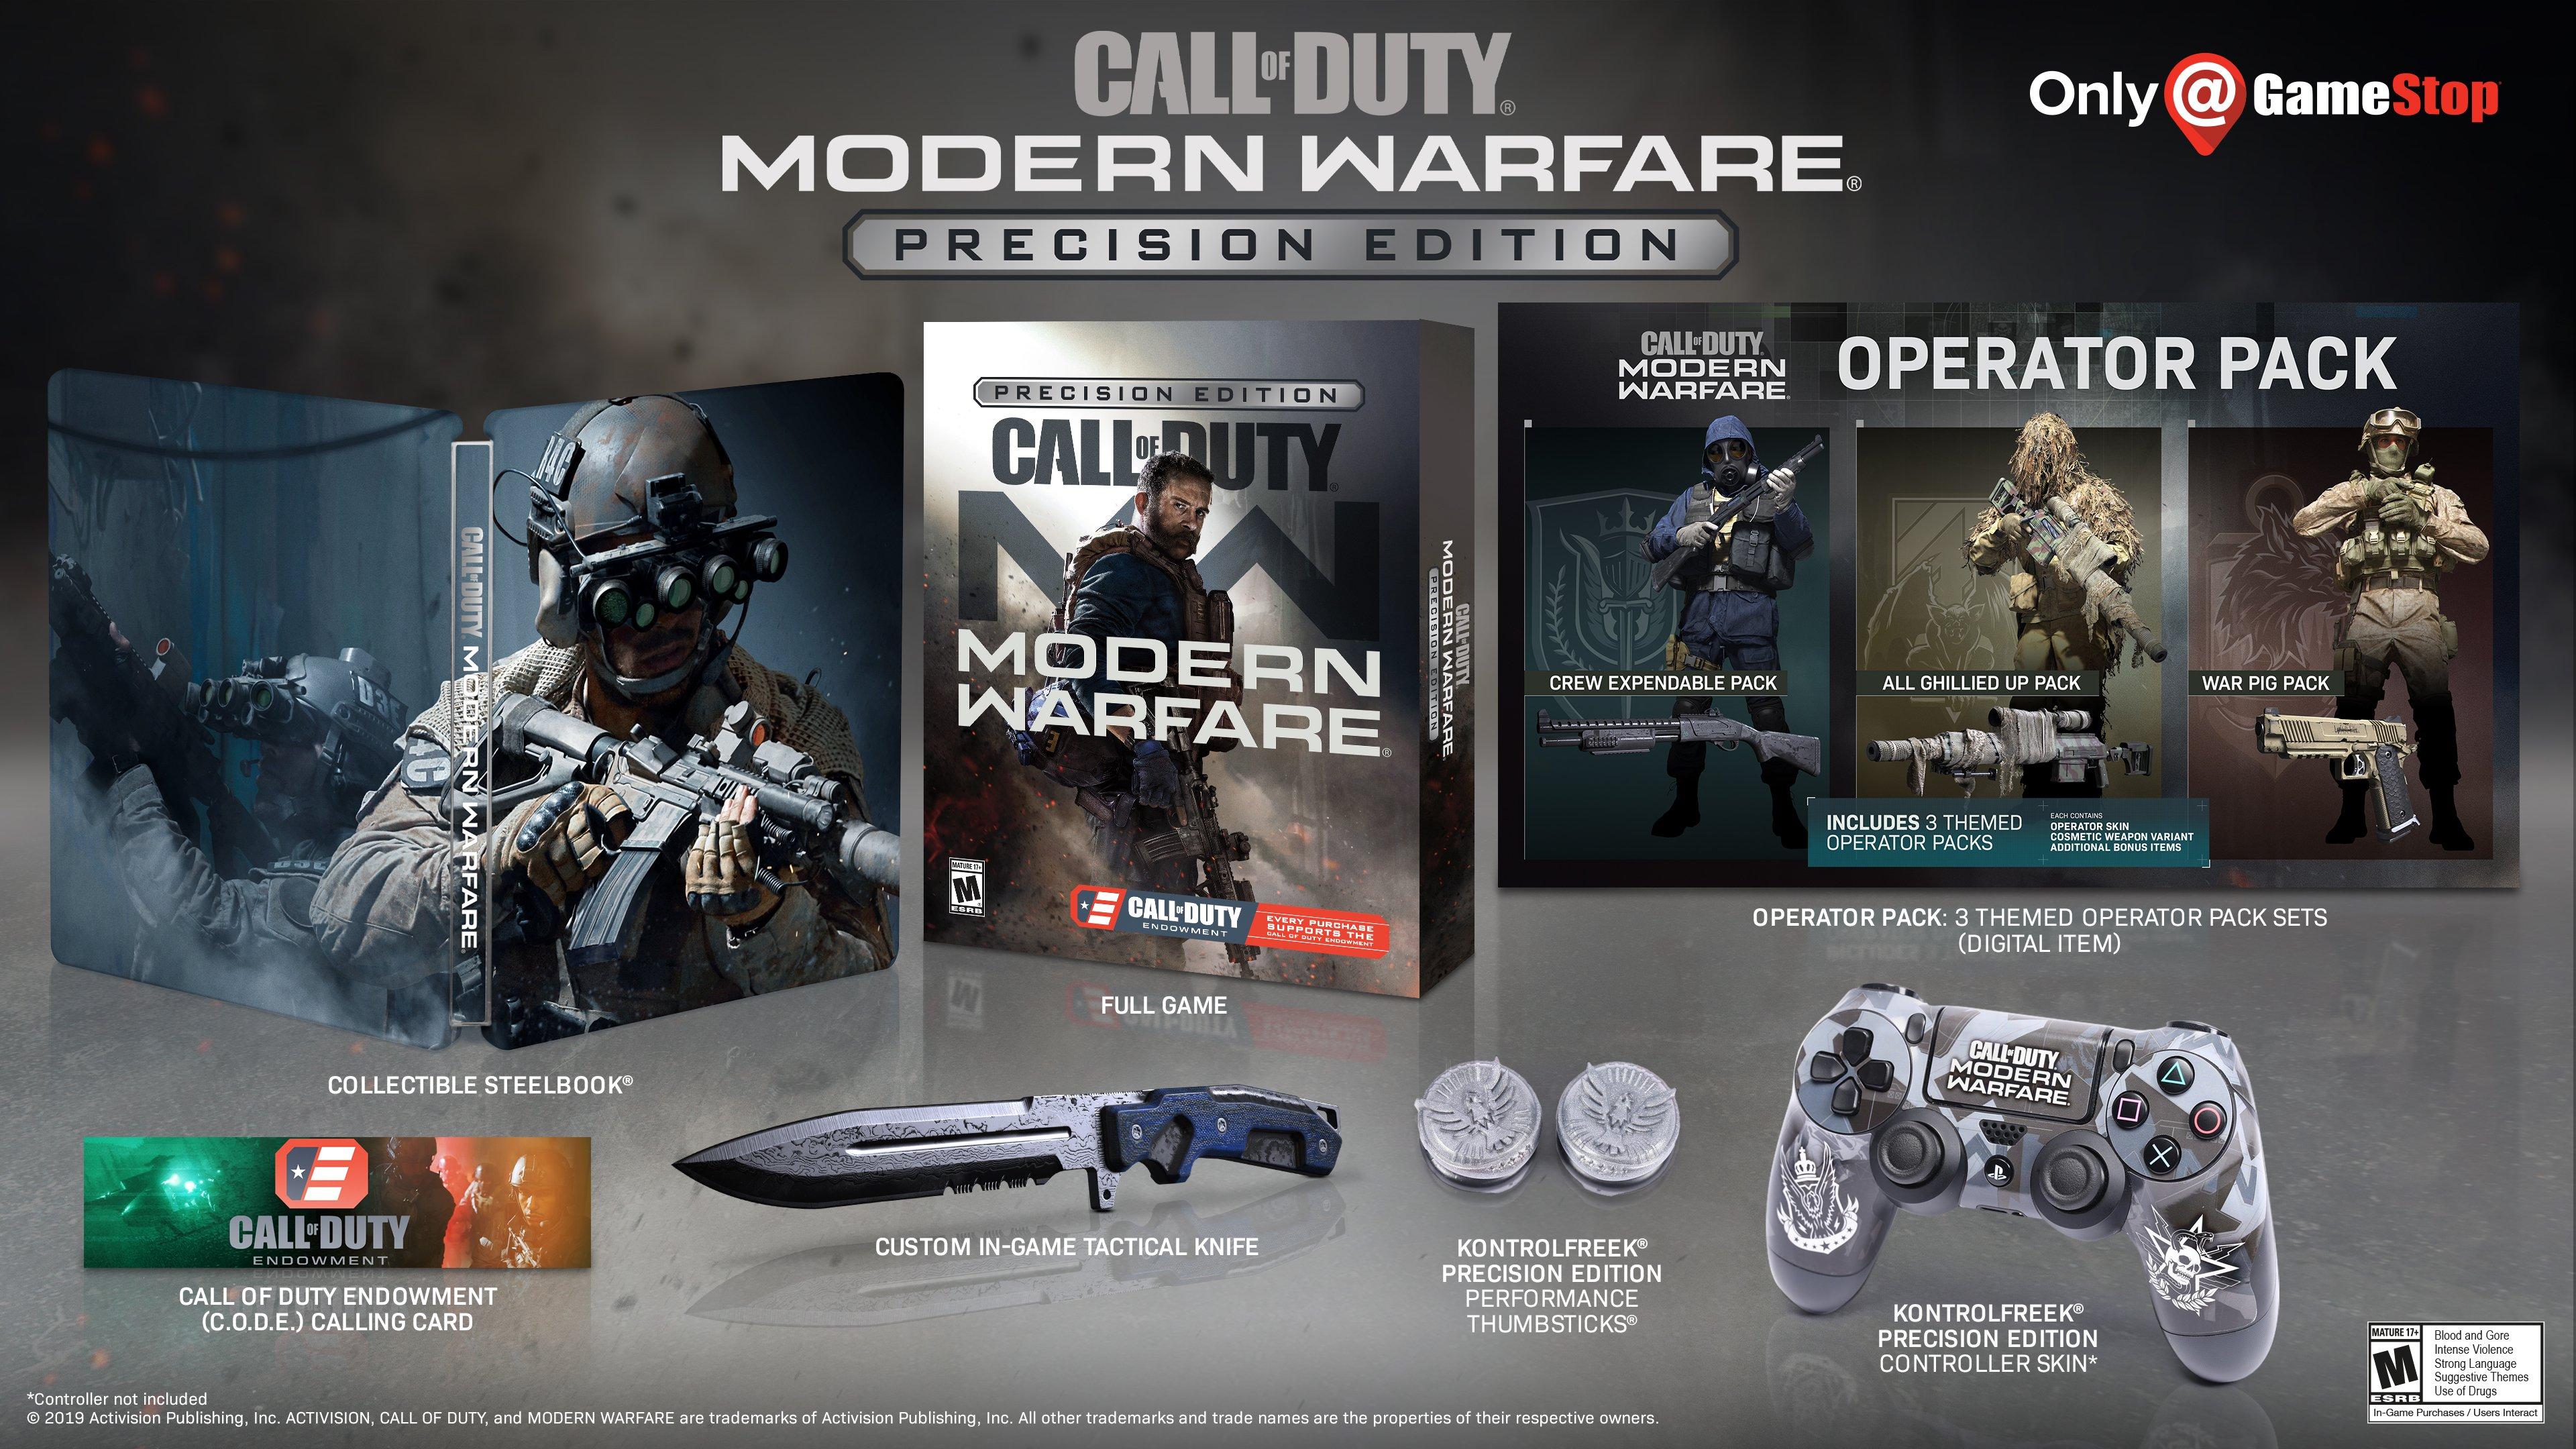 Call Of Duty Modern Warfare C O D E Precision Edition Only At Gamestop Playstation 4 Gamestop